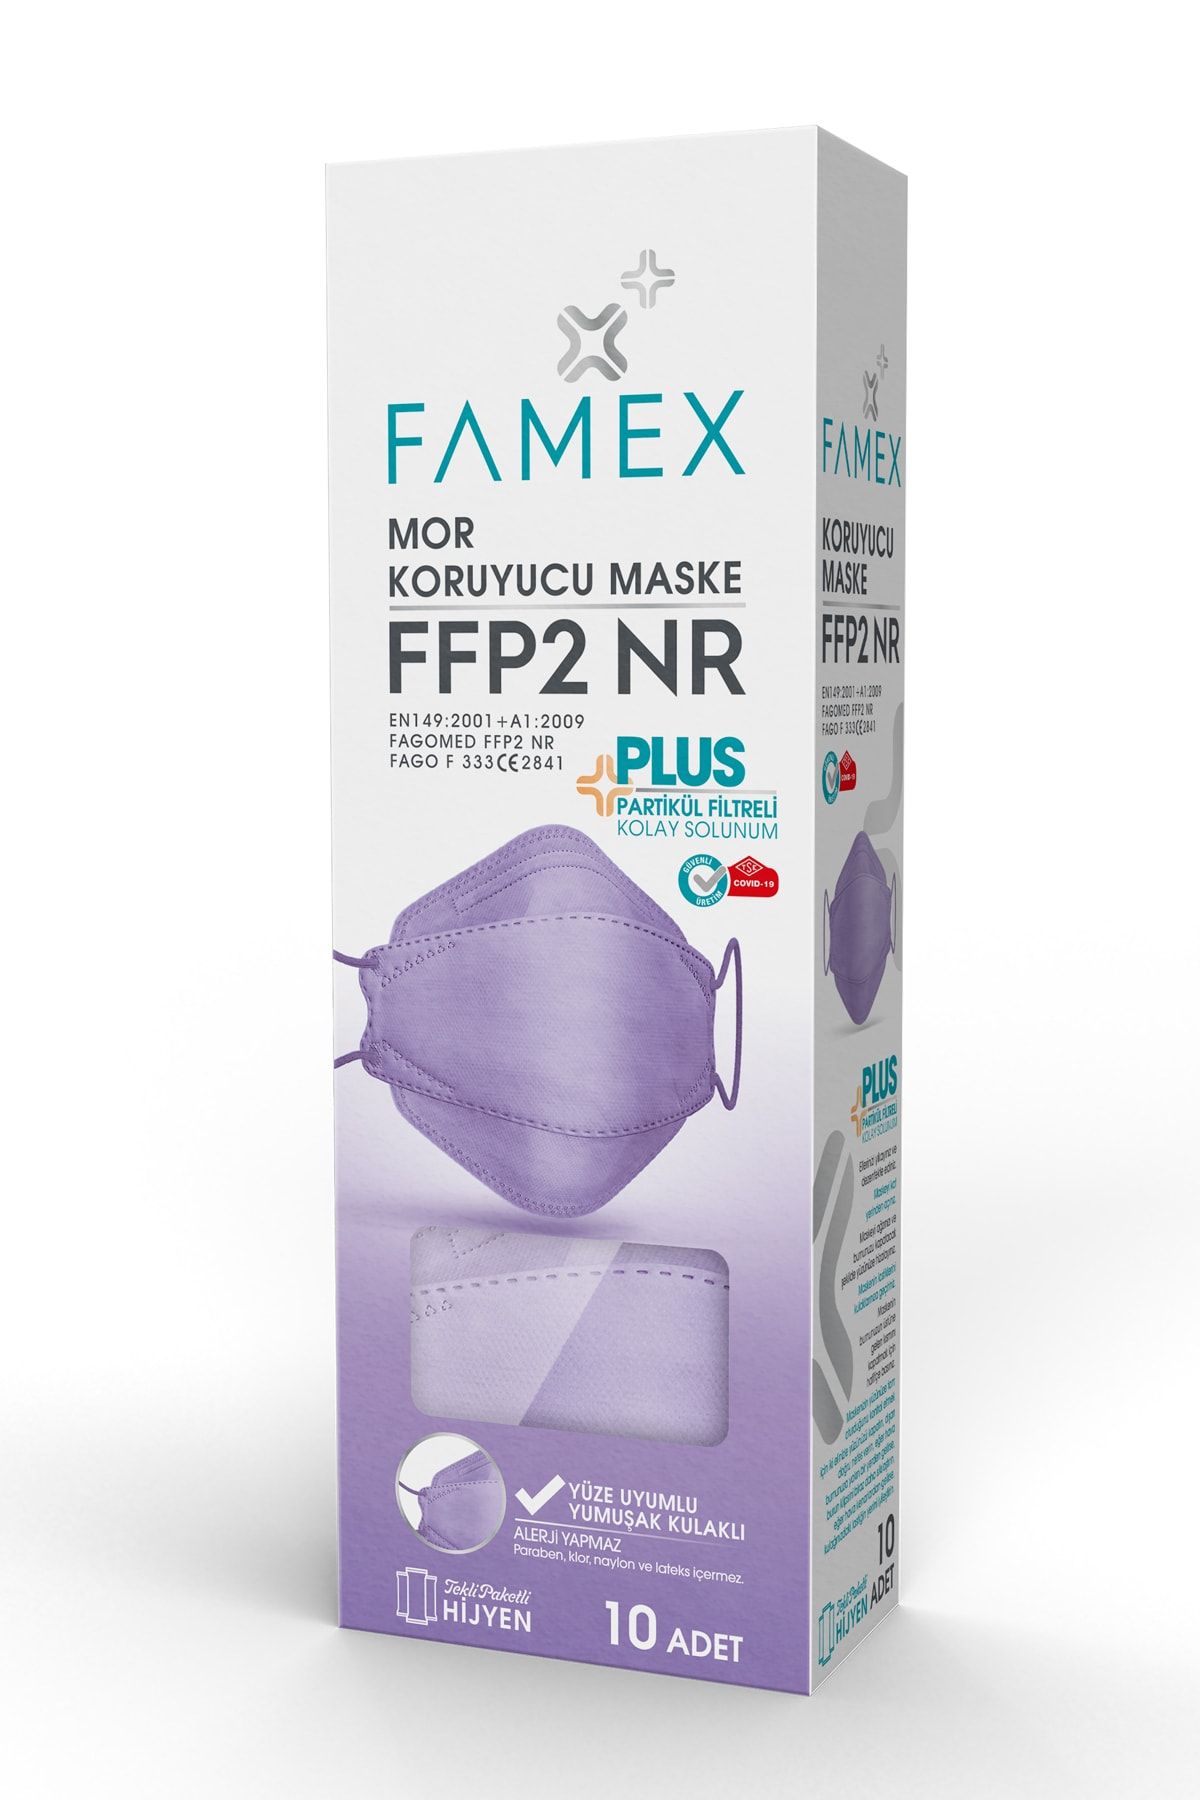 FAMEX N95 Ffp2 Koruyucu Maske Mor Renk 10 Adet Tekli Paket Fish Modeli